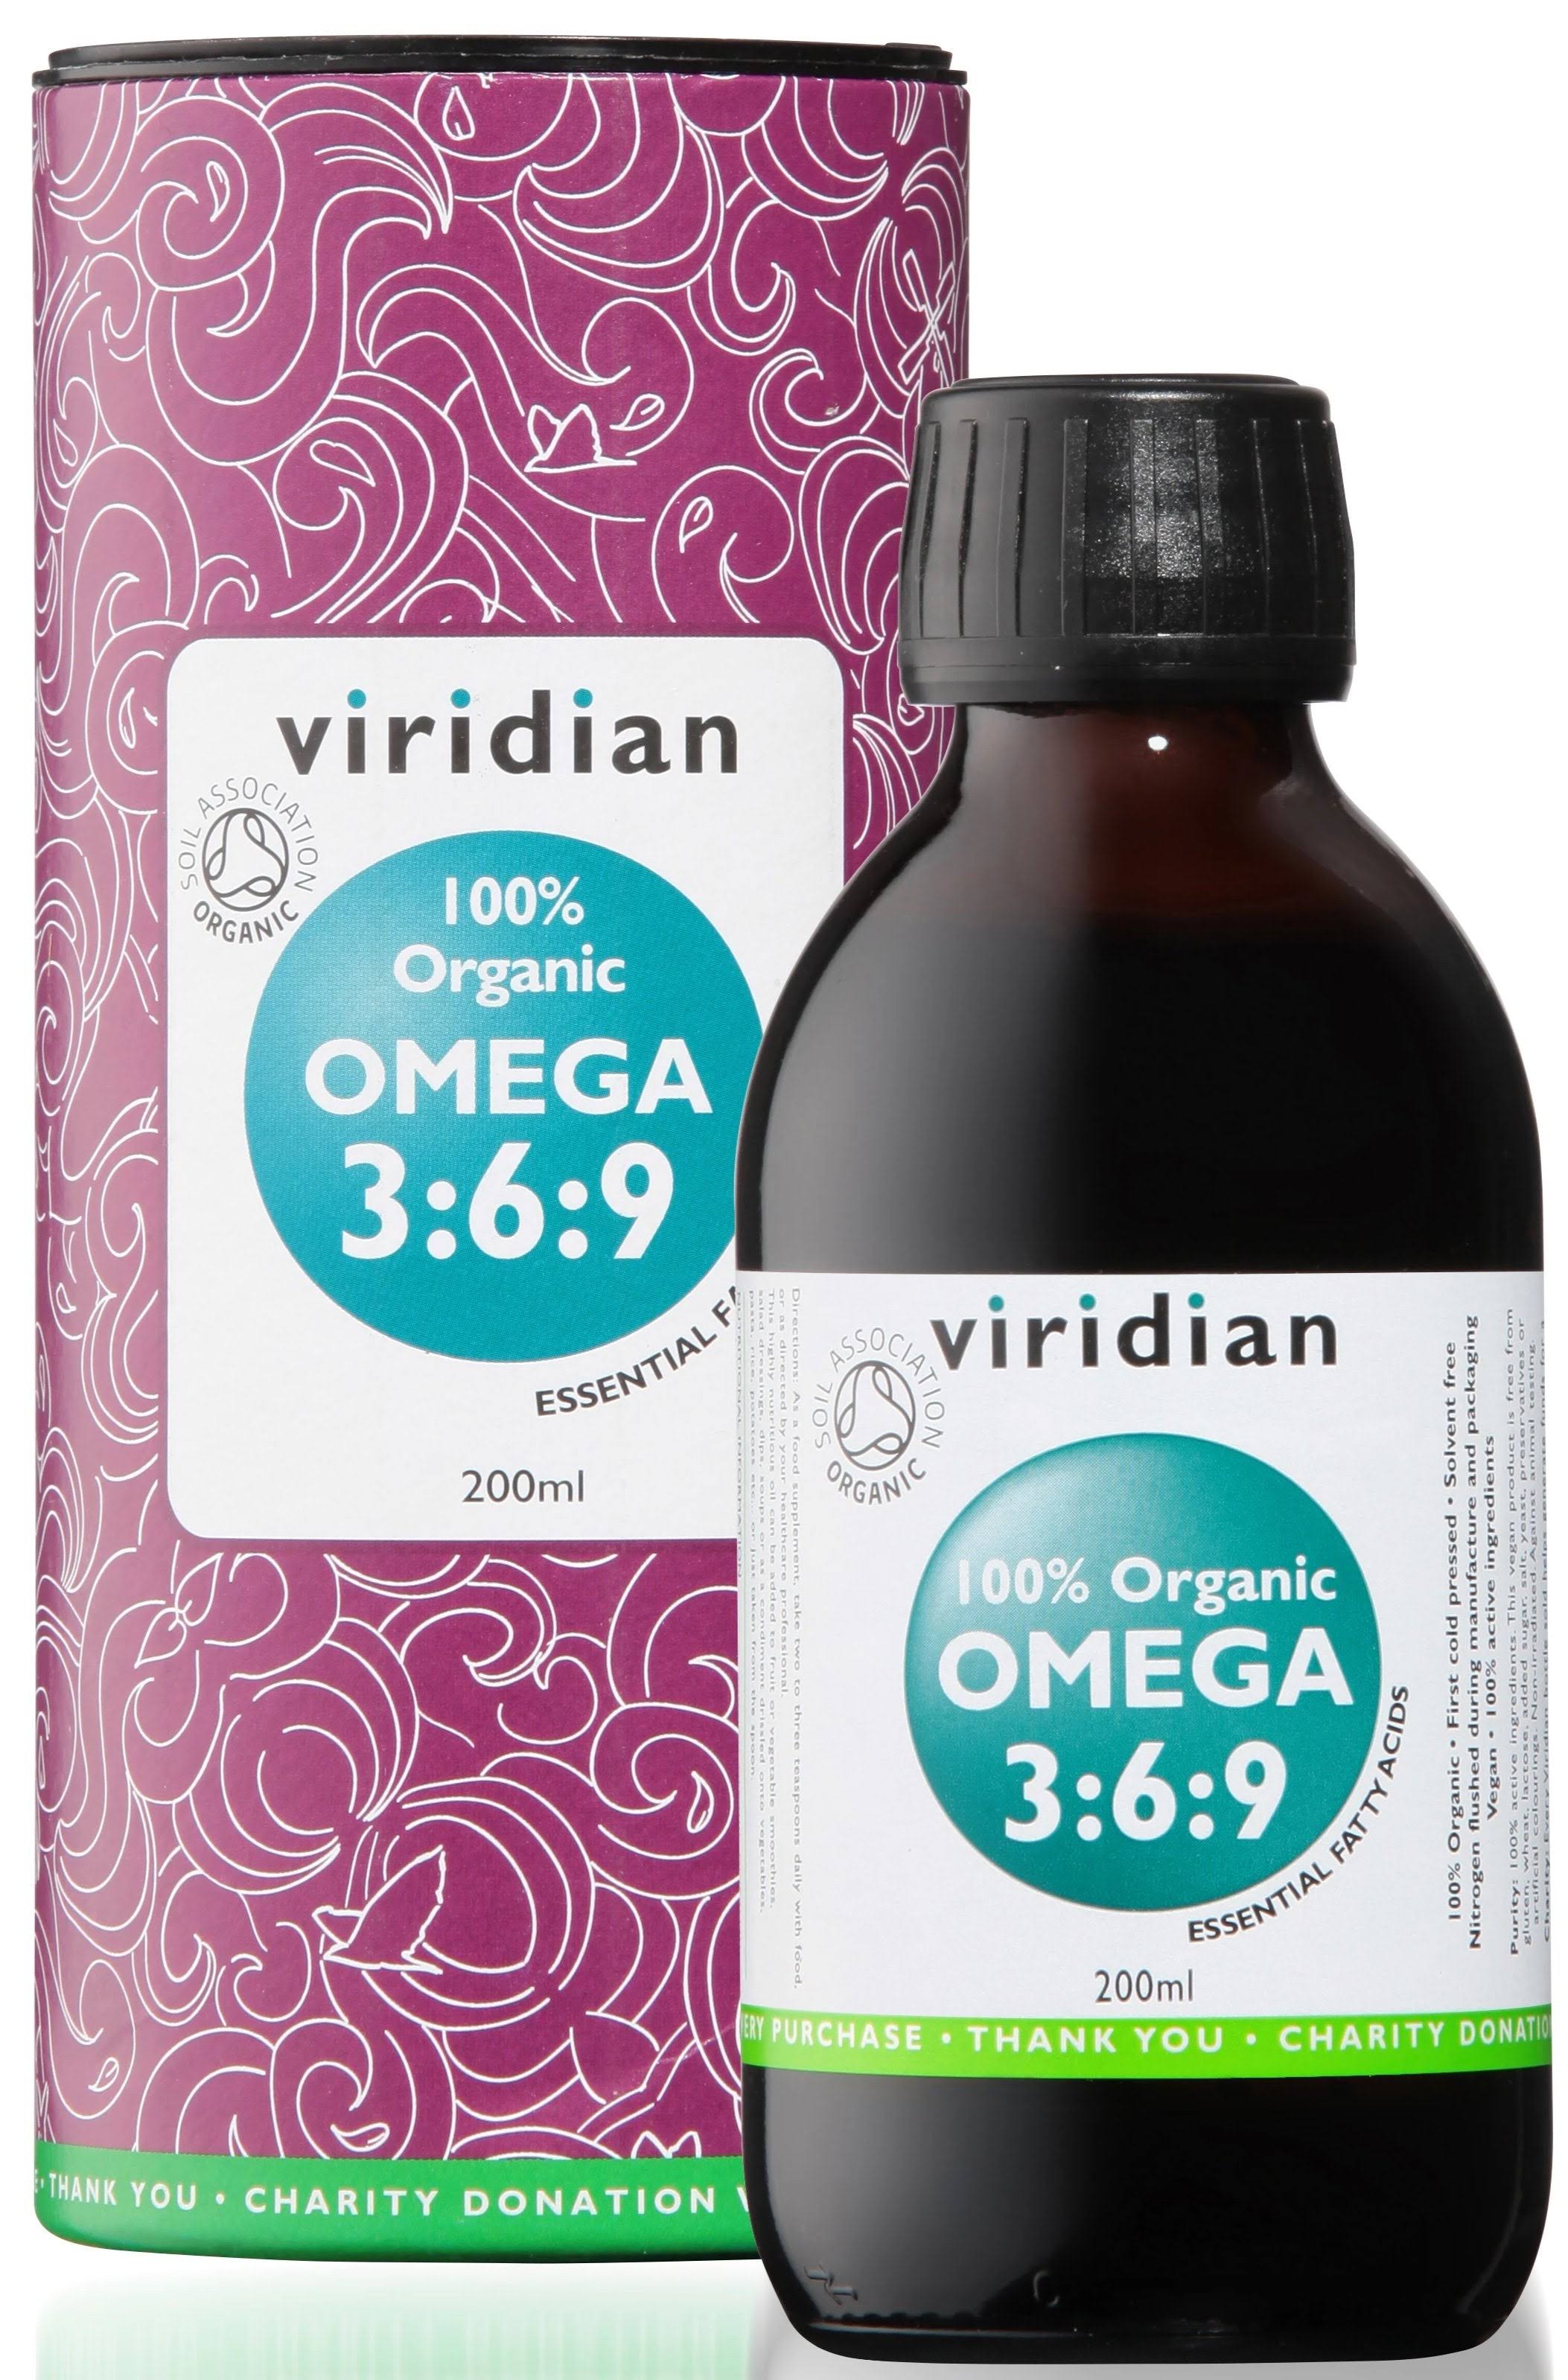 Viridian 100% Organic Omega 3:6:9 Oil - 200ml